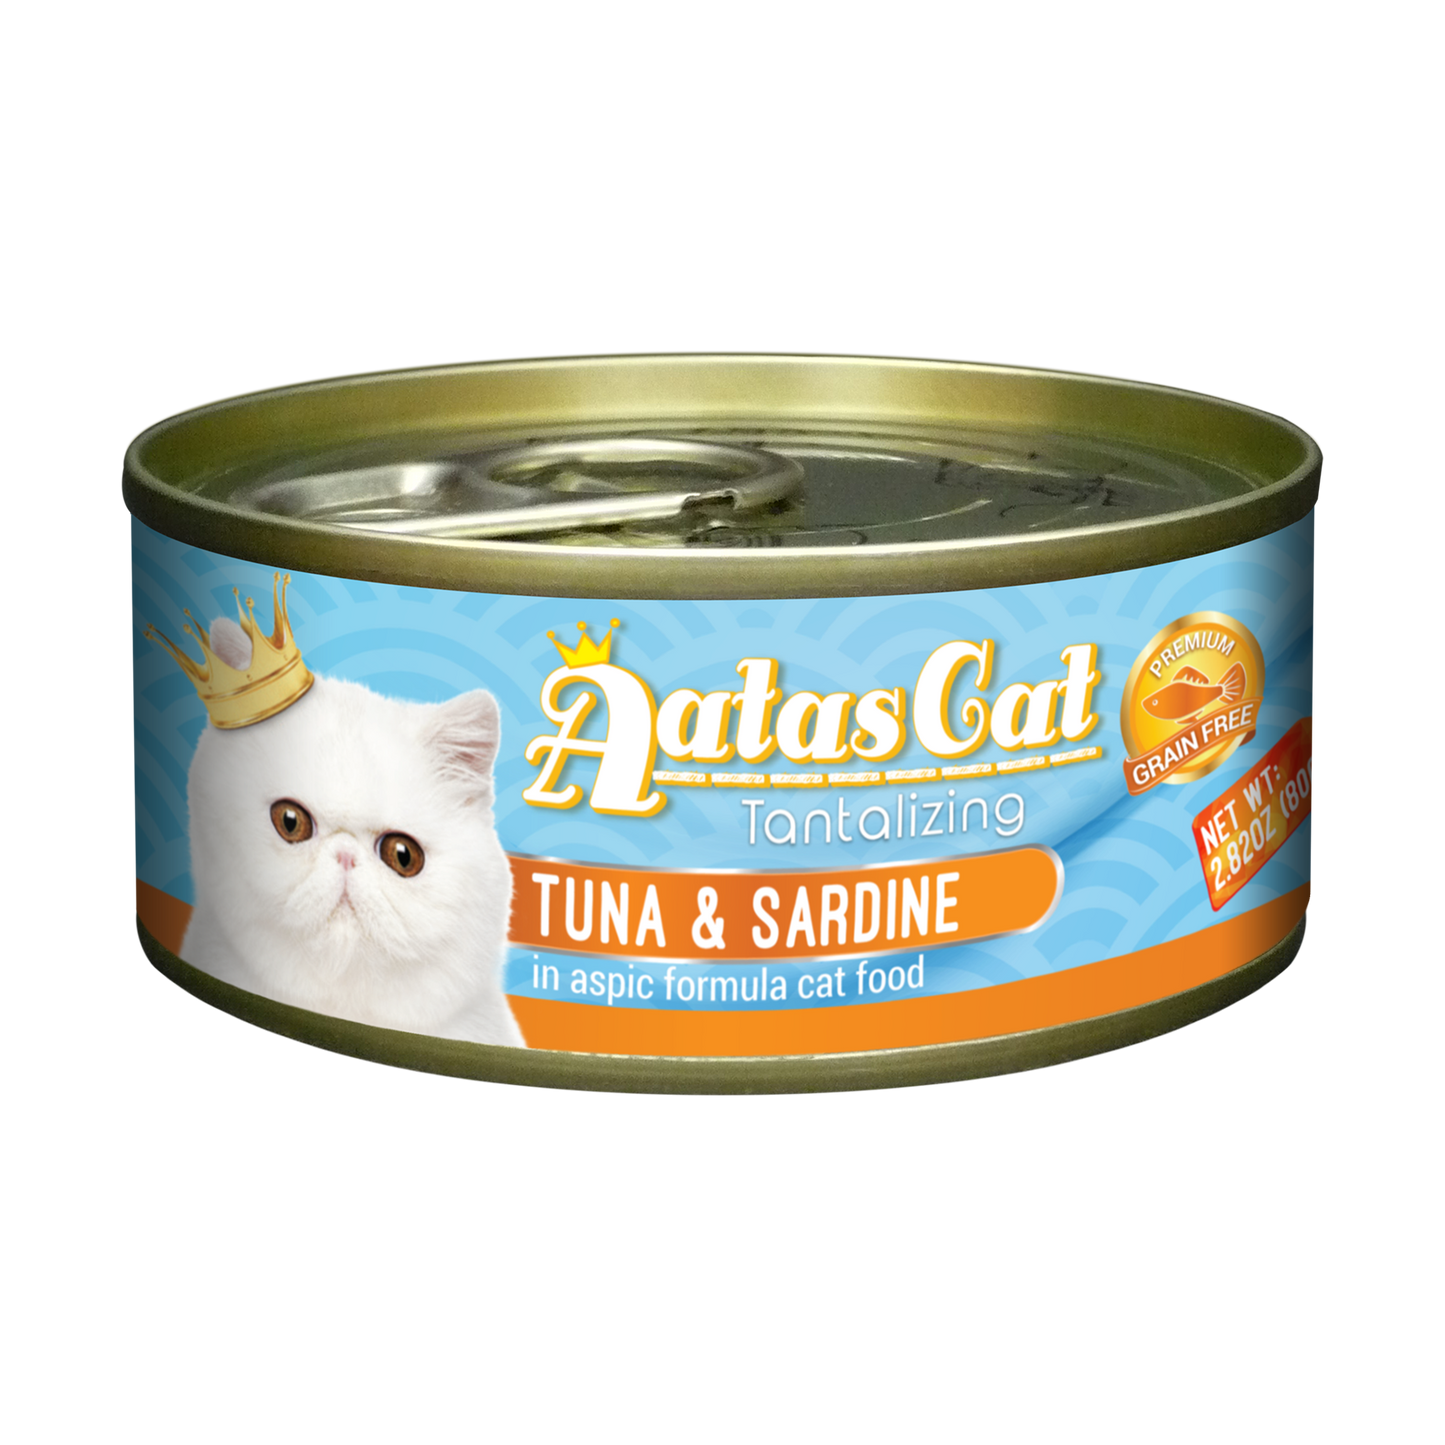 Aatas Cat Tantalizing Tuna & Sardine Cat Canned Food 80g